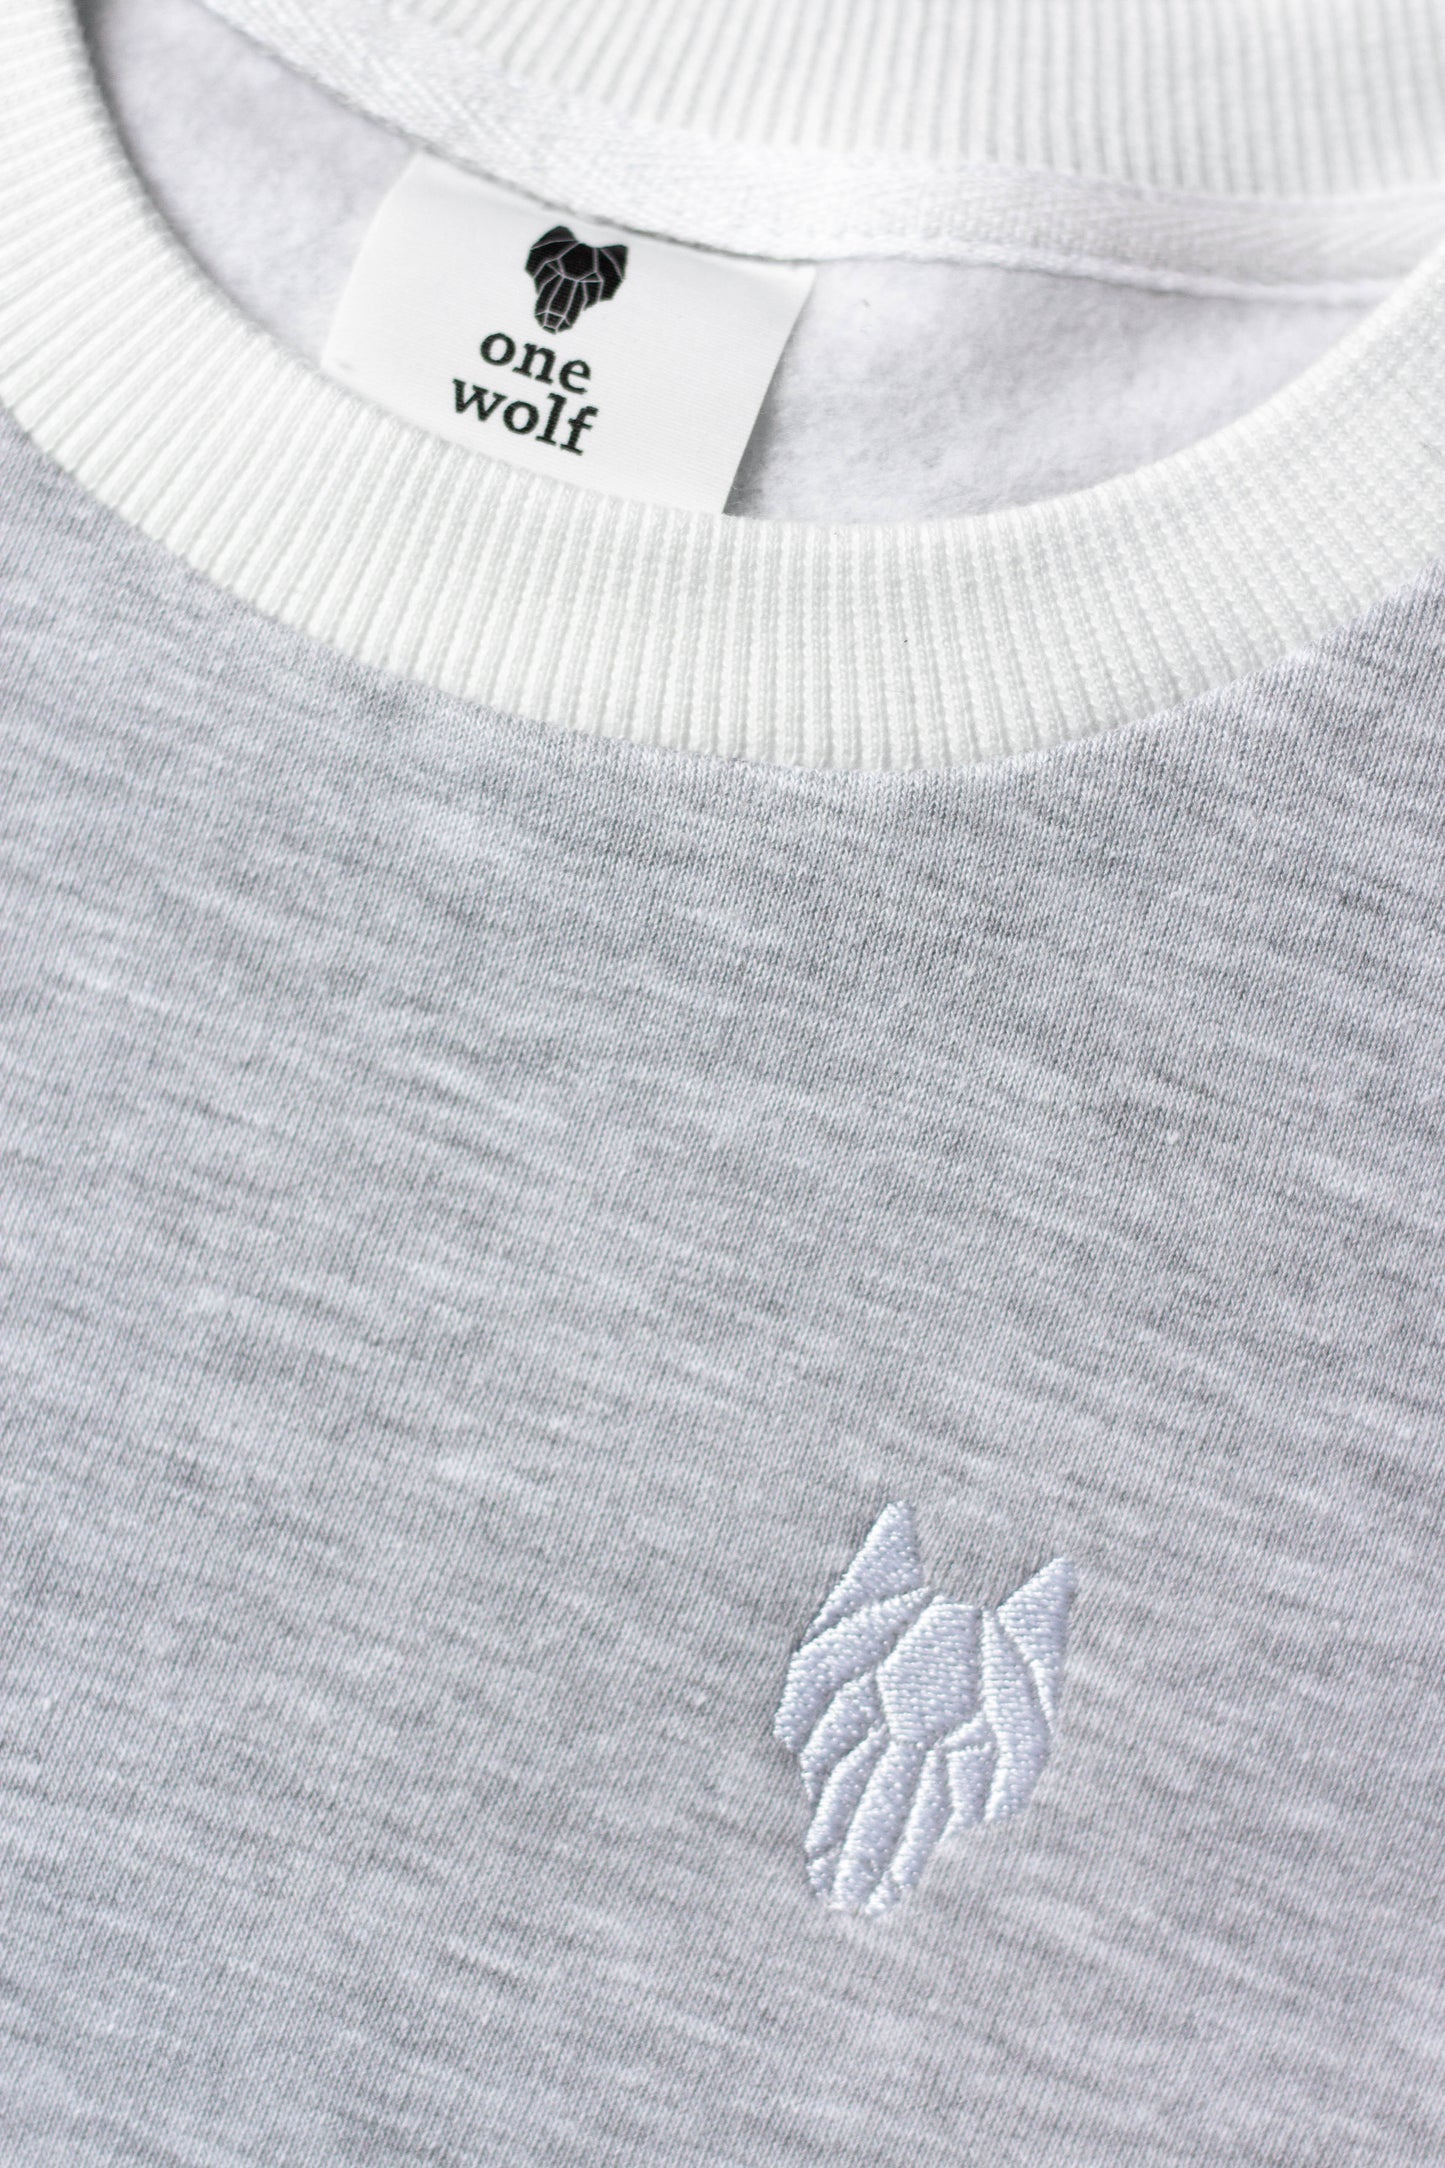 Bērnu One Wolf džemperis, pelēks ar baltu logo